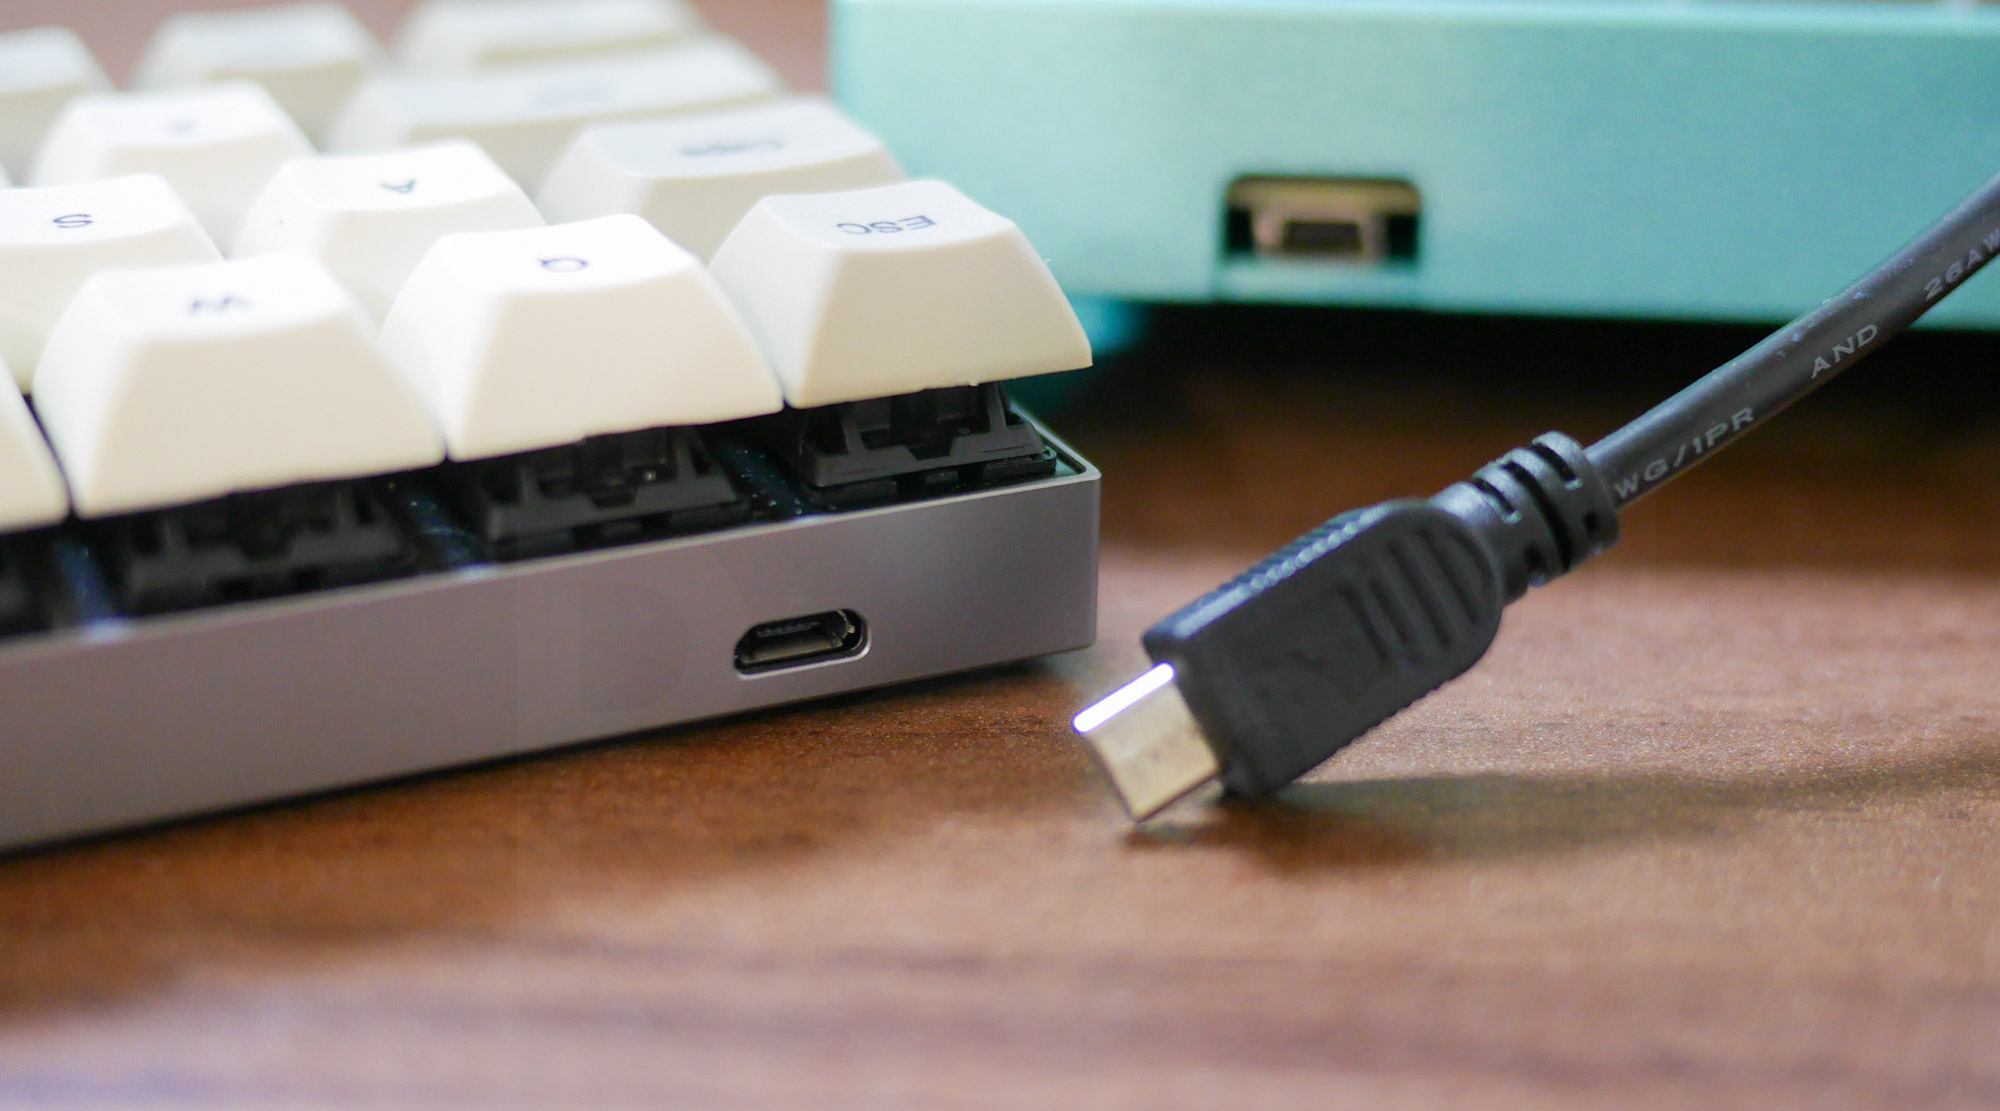 Vortex Core: Backside micro-USB connector